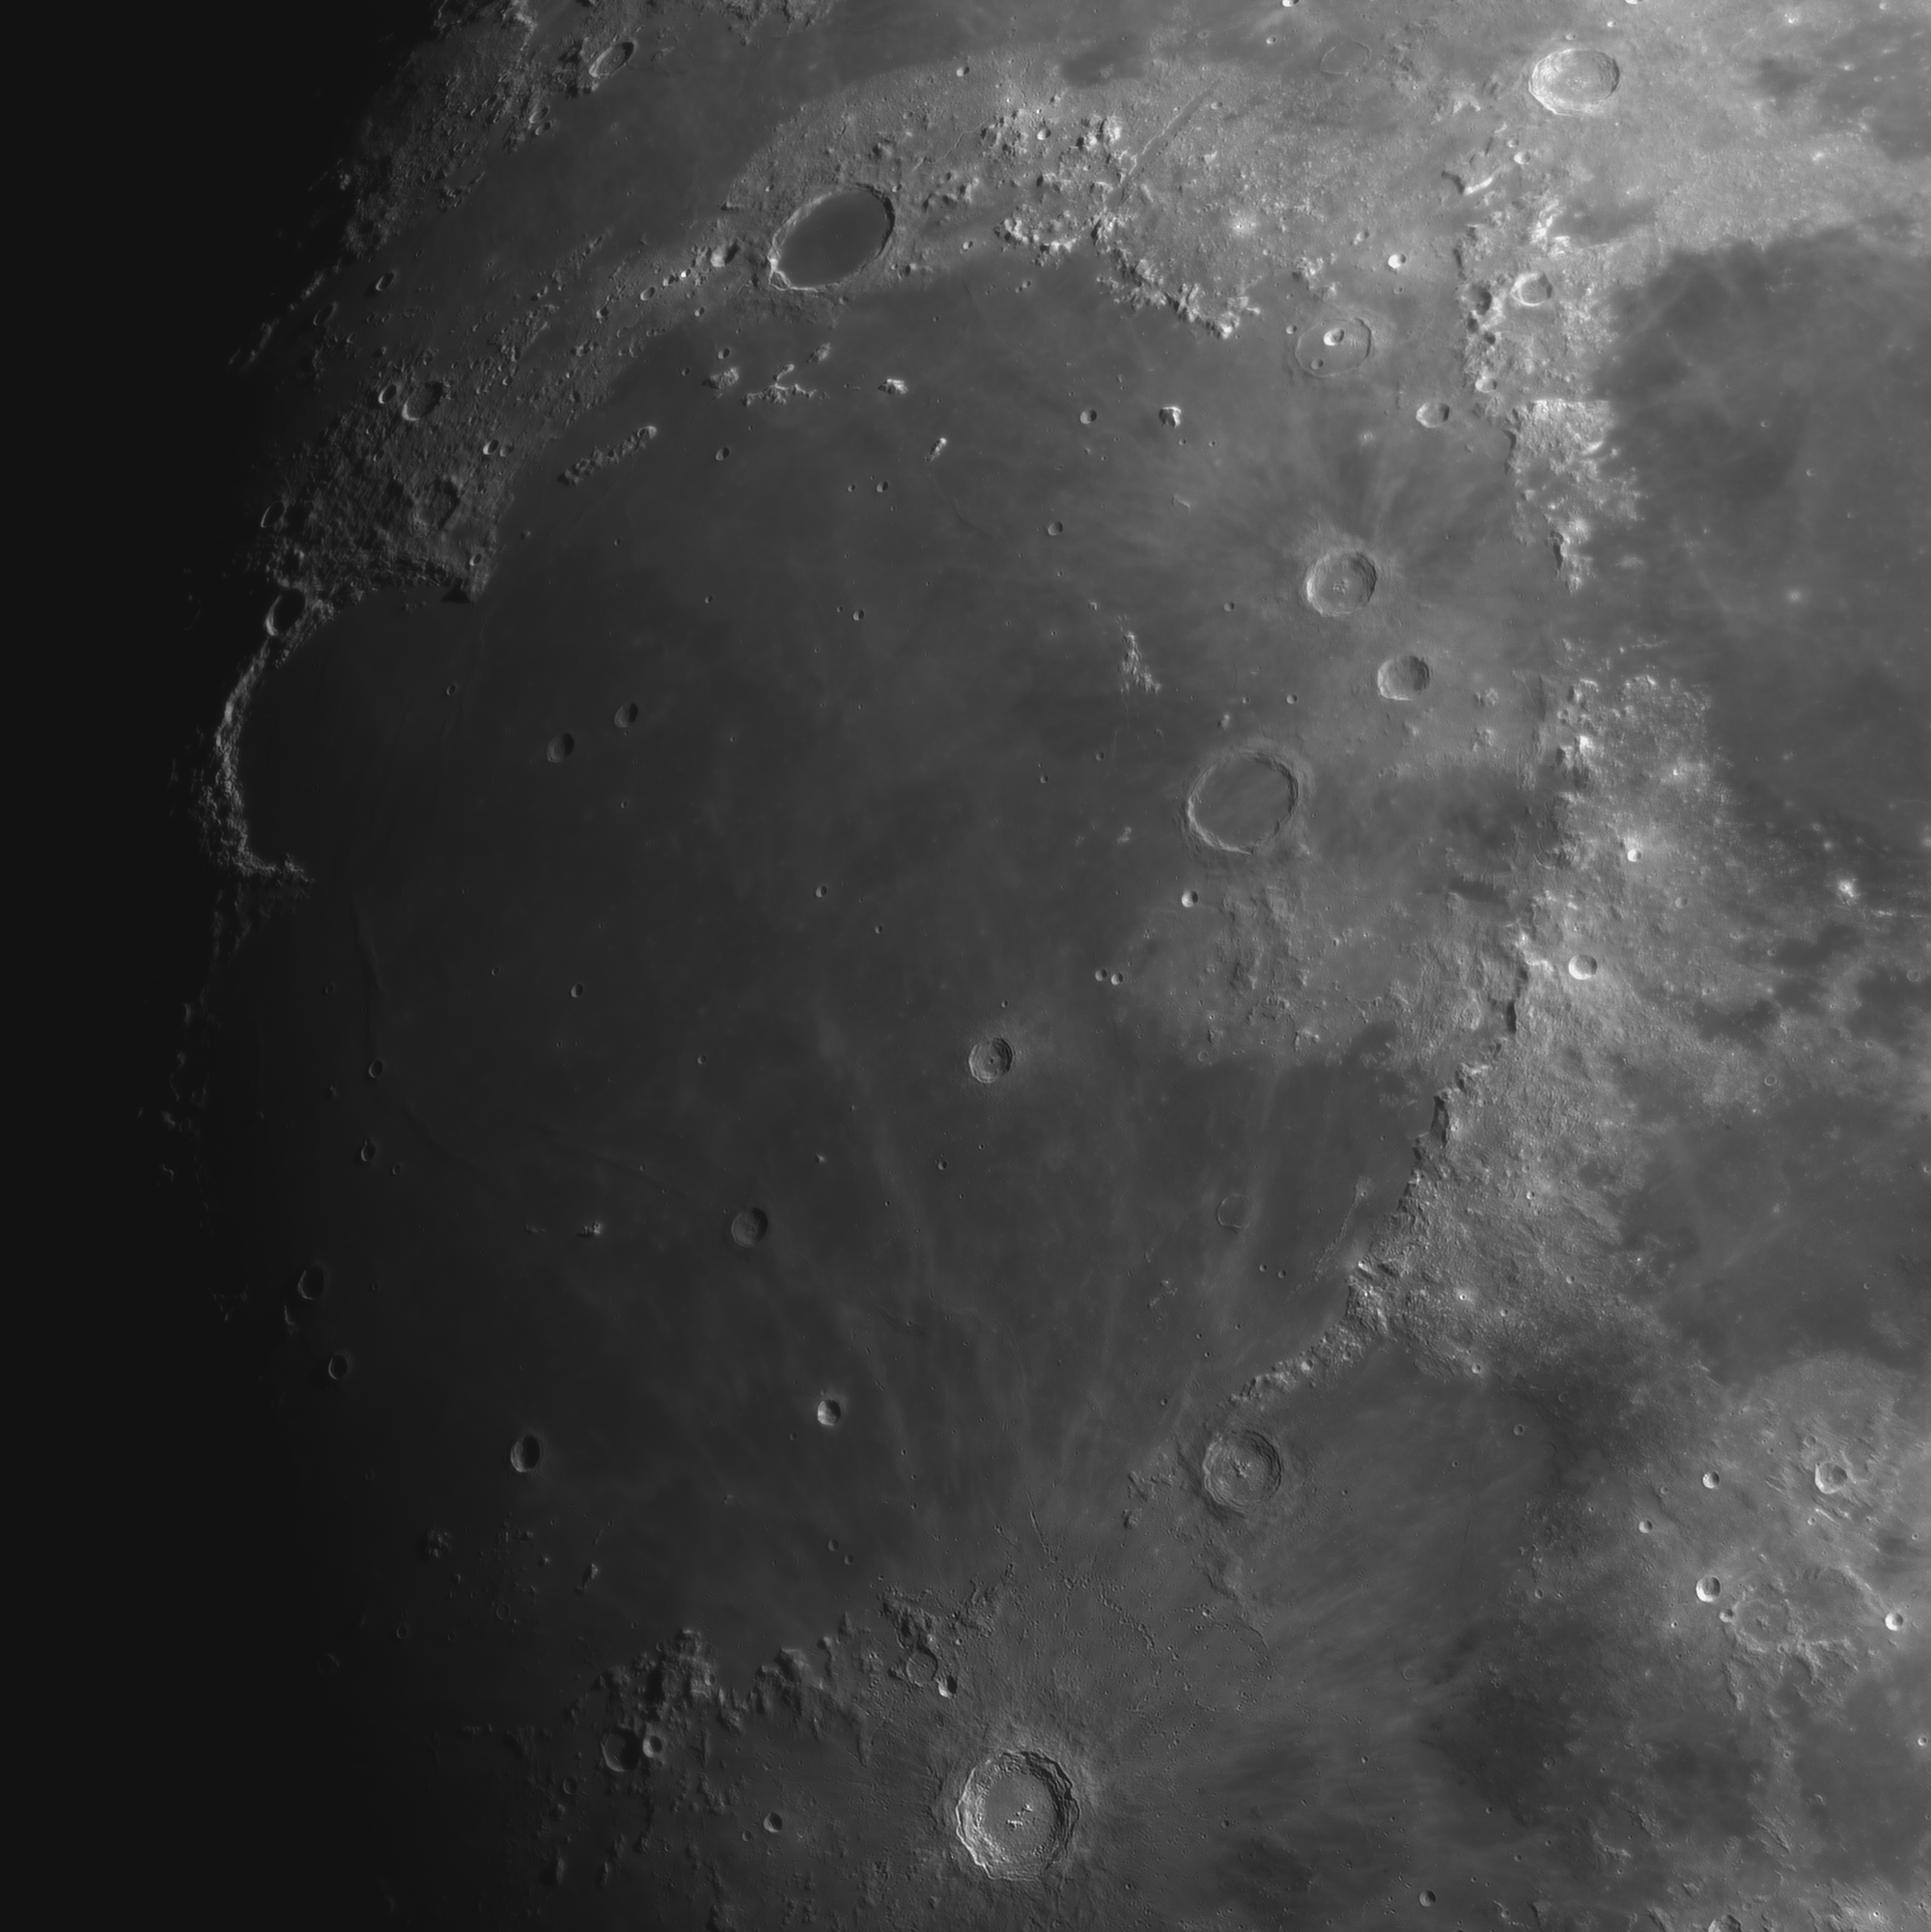 Mare Imbrium & Kopernikuskrater